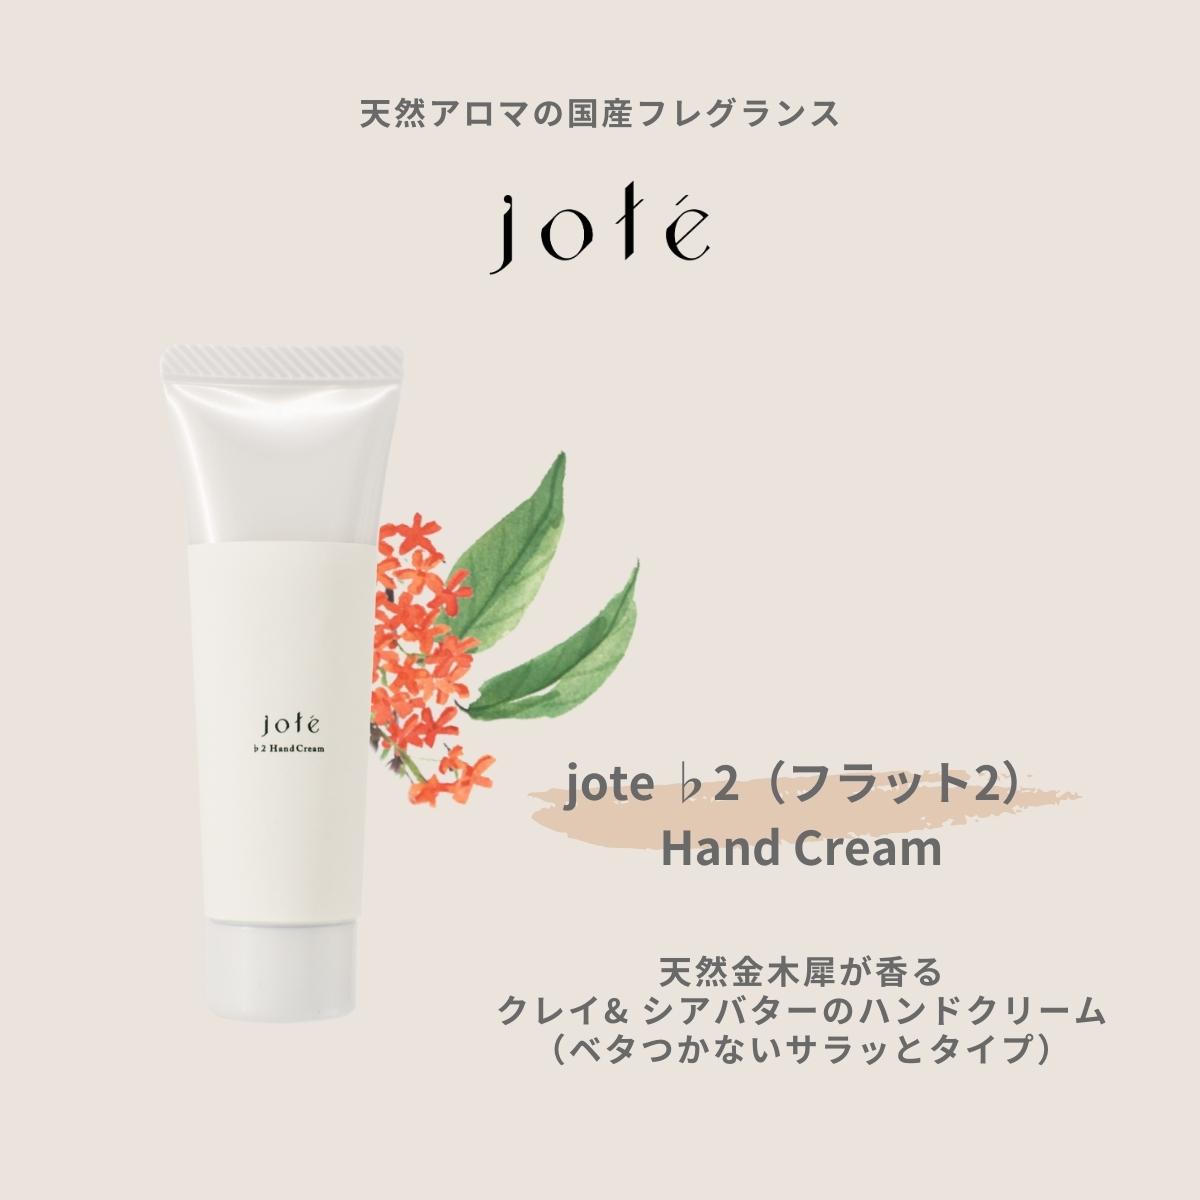 jote ♭2（フラット２）Hand Cream 30g《金木犀の香り》ハンドクリーム